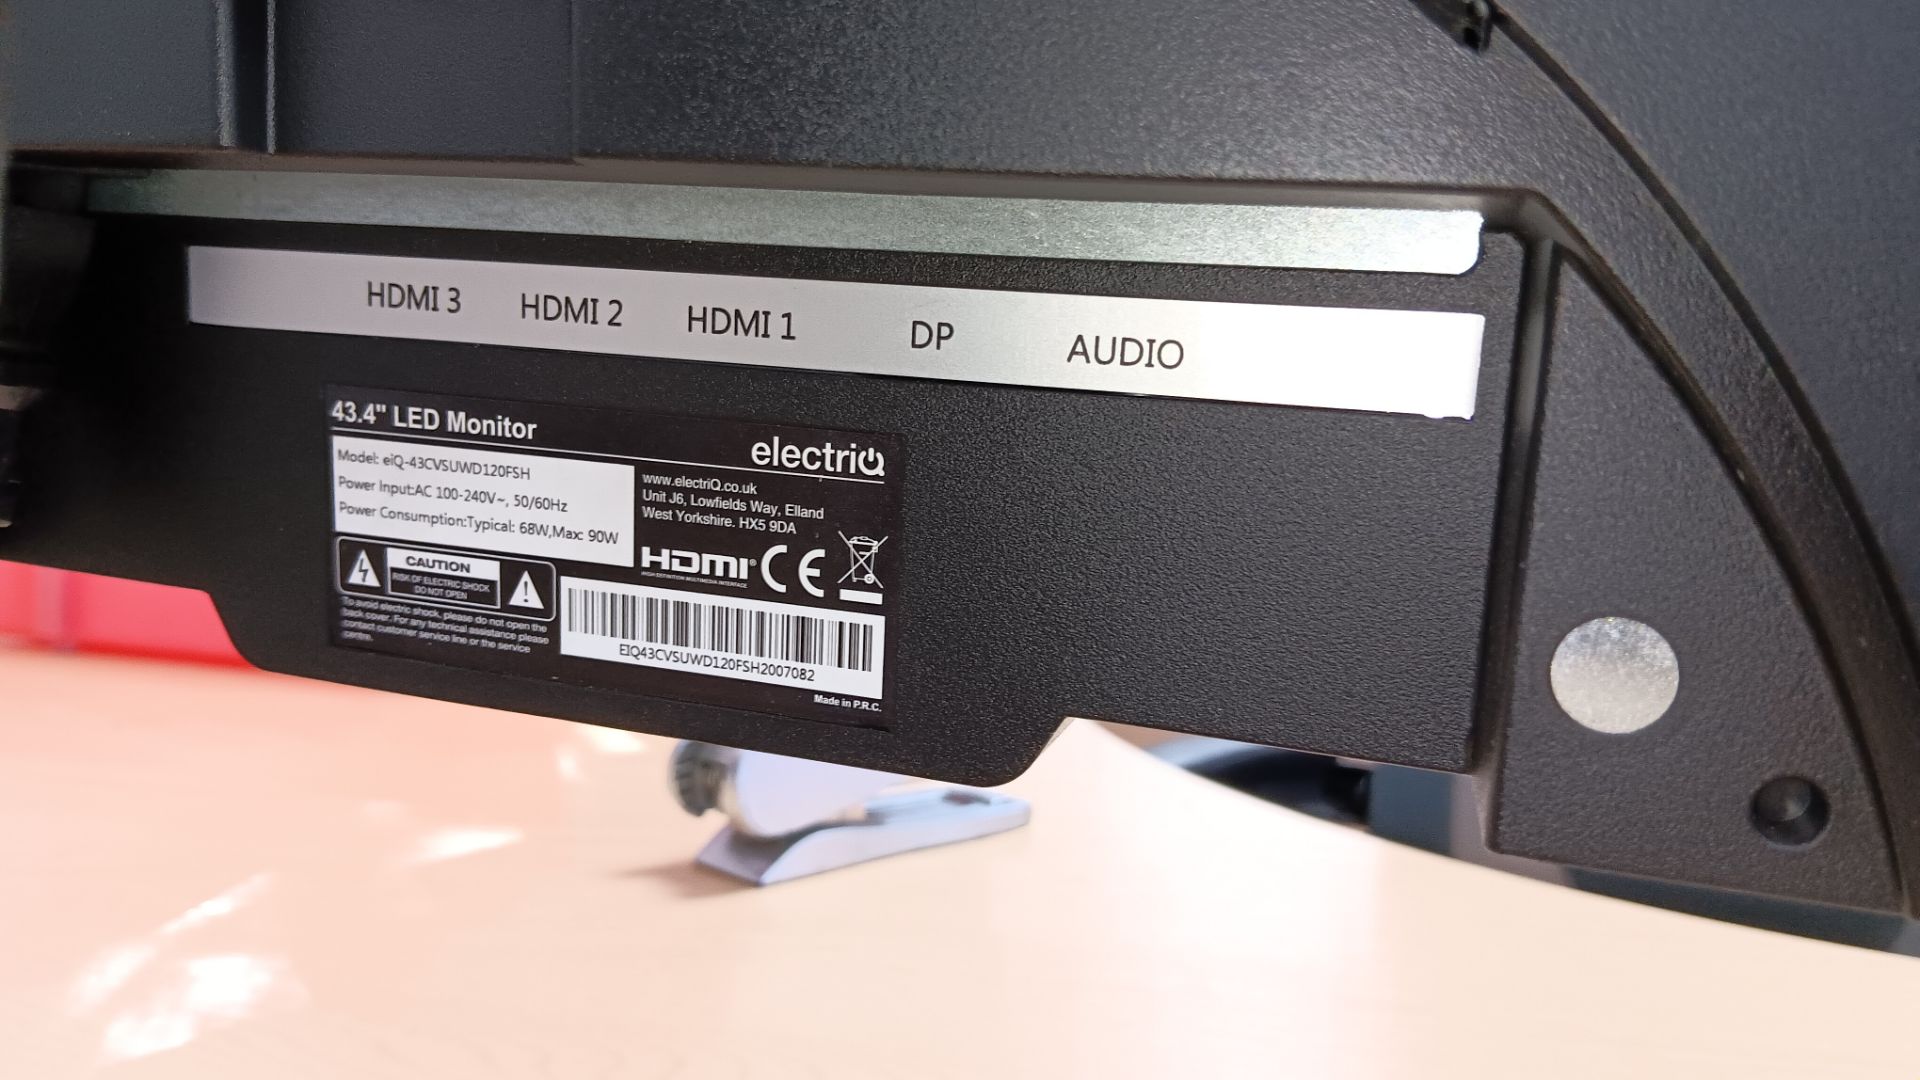 ElectriQ eiQ-43CVSUWD120FSH ultrawide 43.4in curved LED monitor – Located Twyford, OX17 - Image 3 of 3